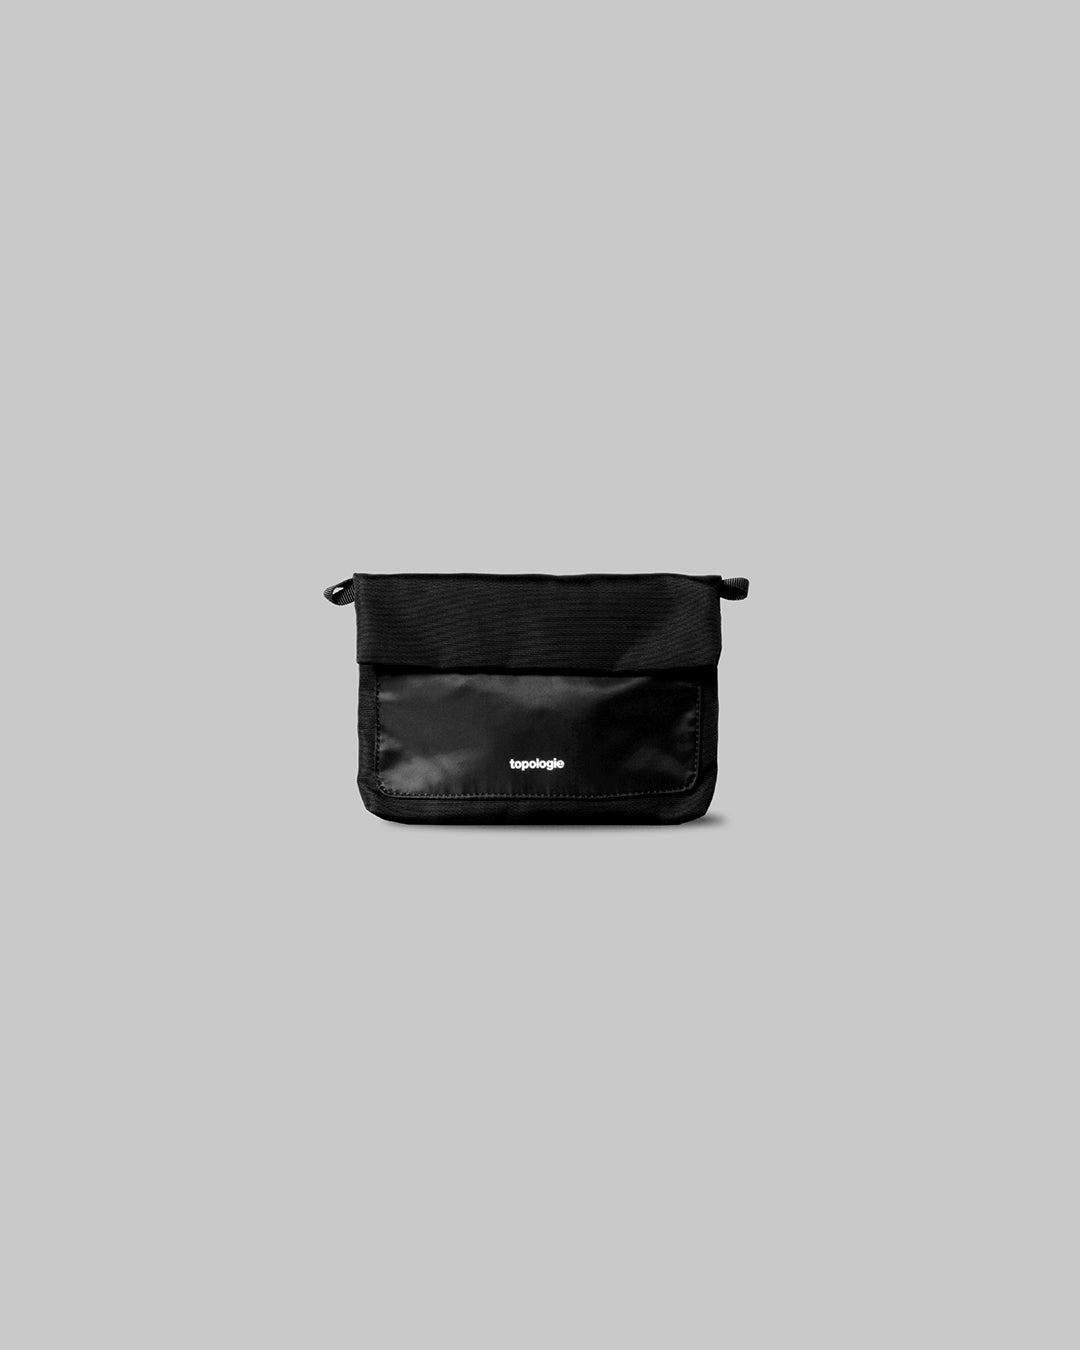 Topologie Ware Bags Musette Mini - Black